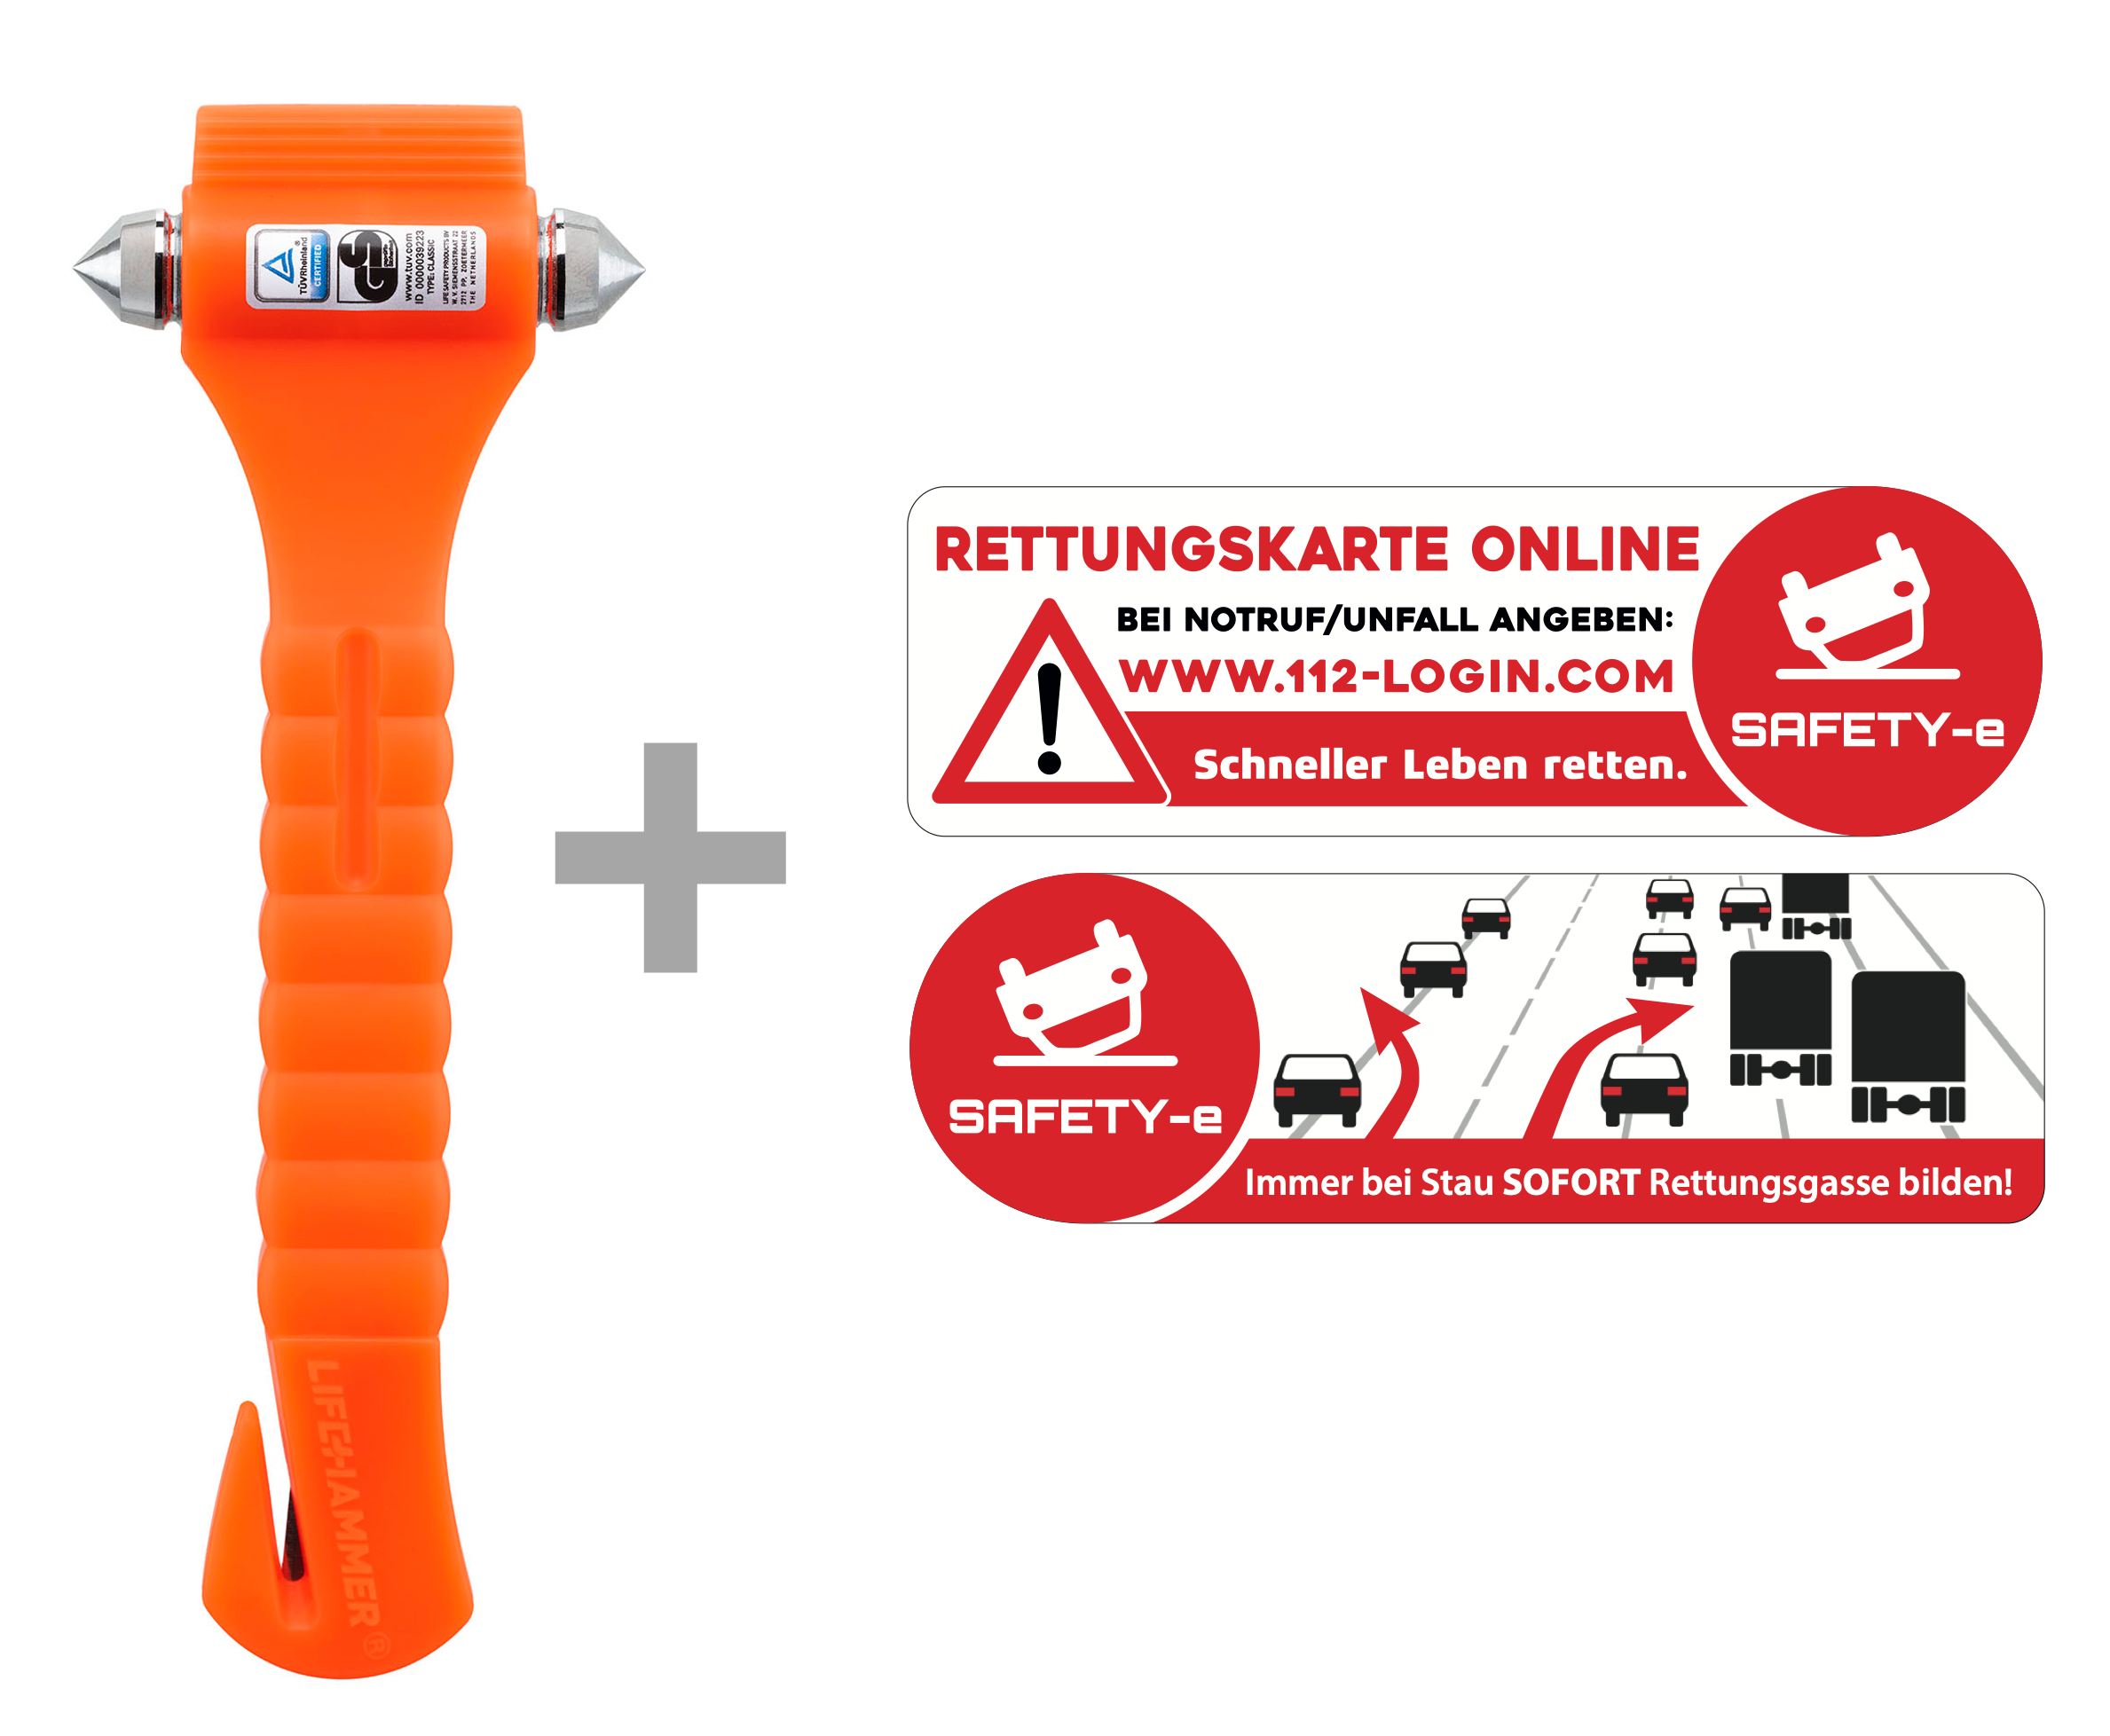 RESQ.SET: SAFETY-e digitale Rettungskarte inkl. Lifehammer (Notfallham –  Rettungskarte-Shop